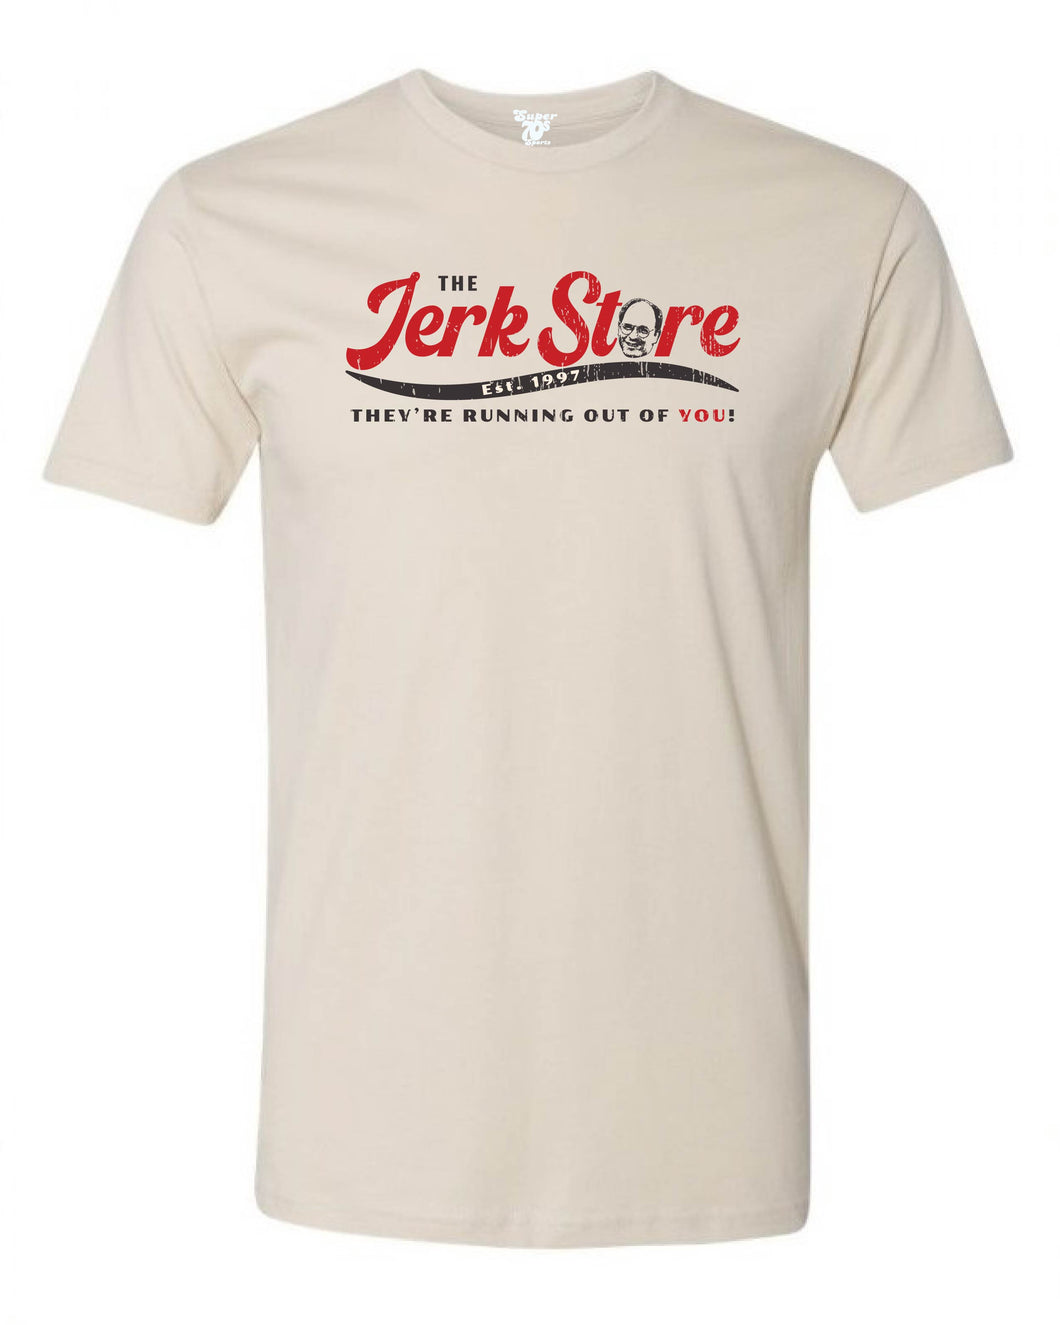 The Jerk Store Tee